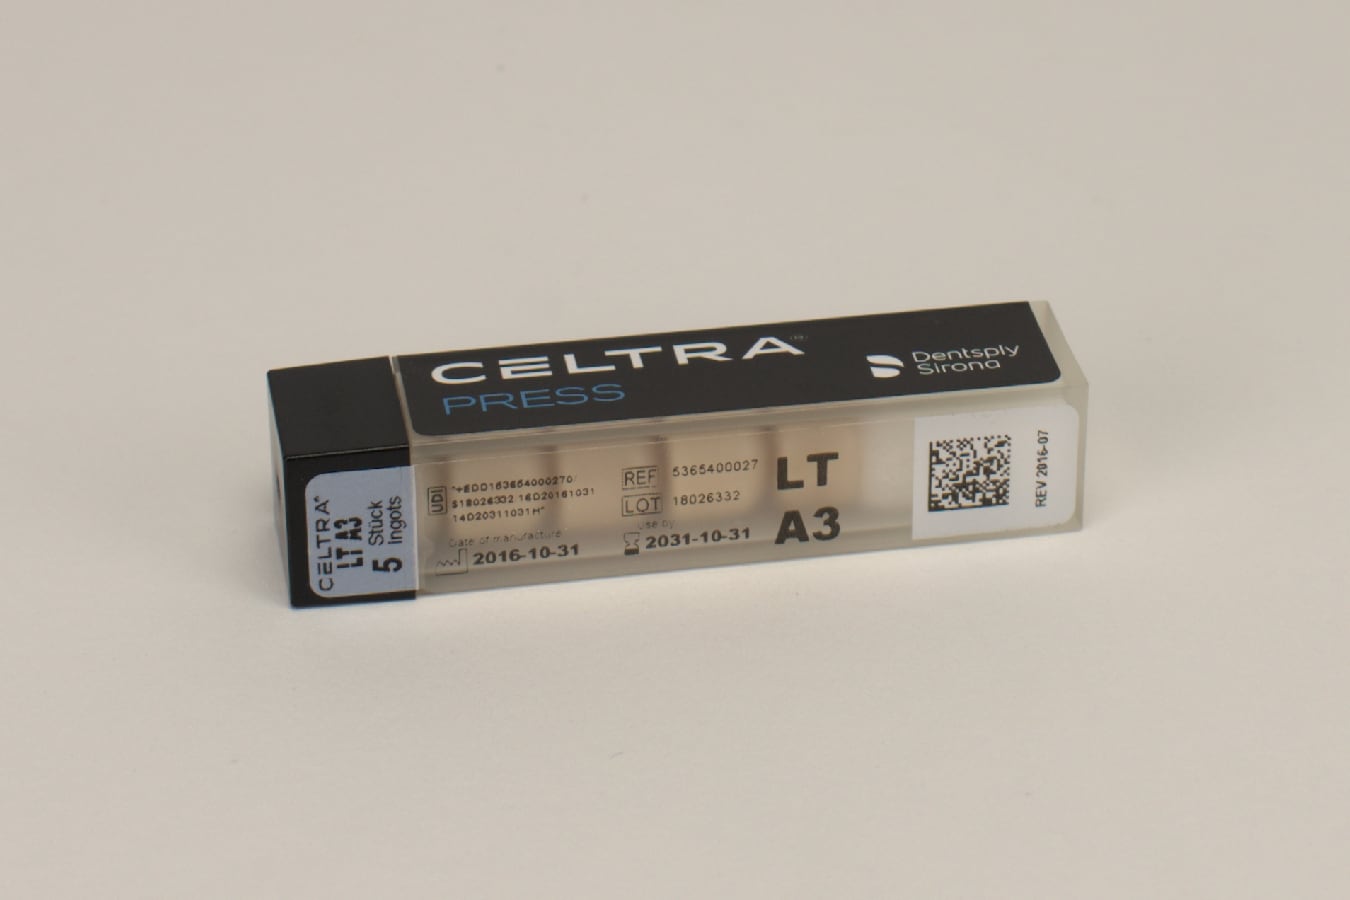 CELTRA PRESS LT A3 5x3g 